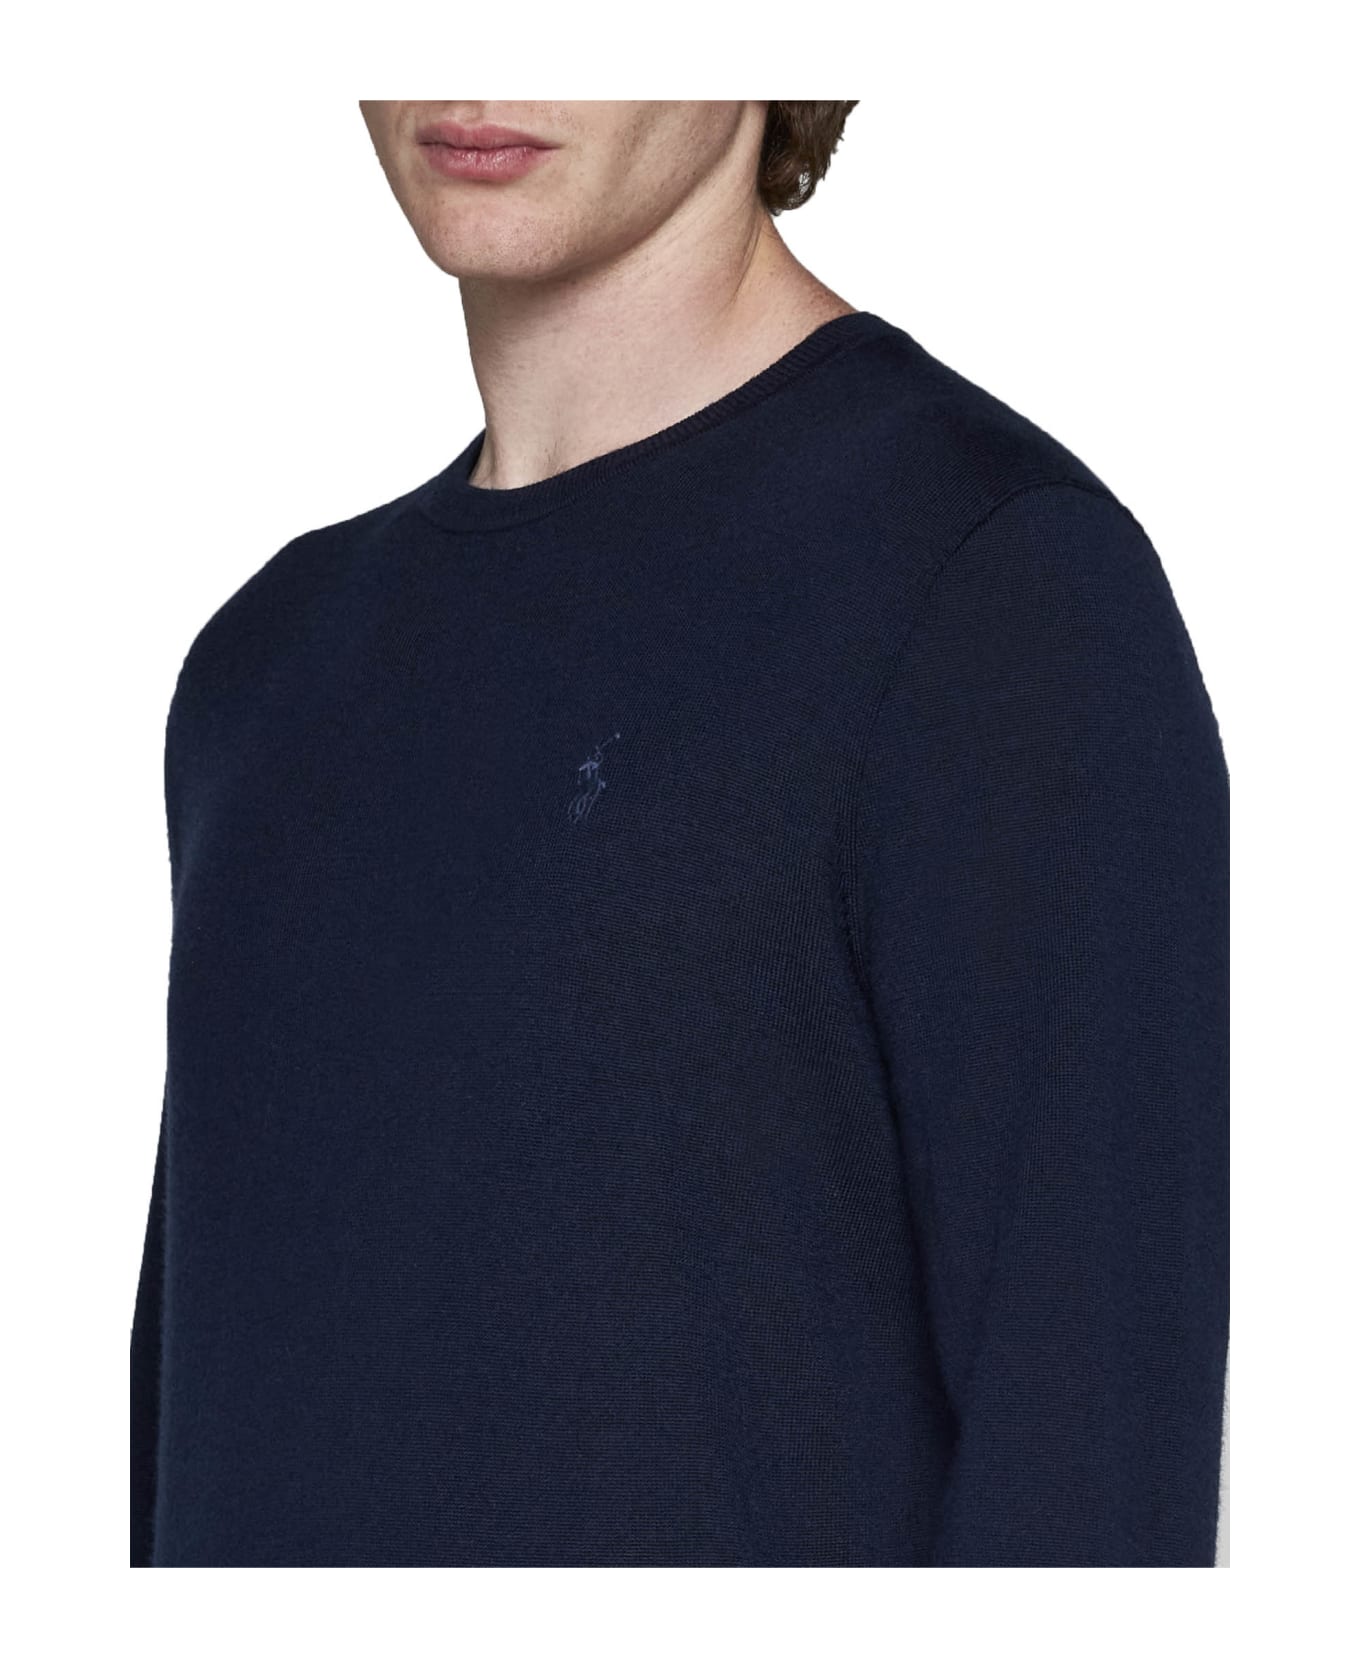 Polo Ralph Lauren Sweater - Hunter navy